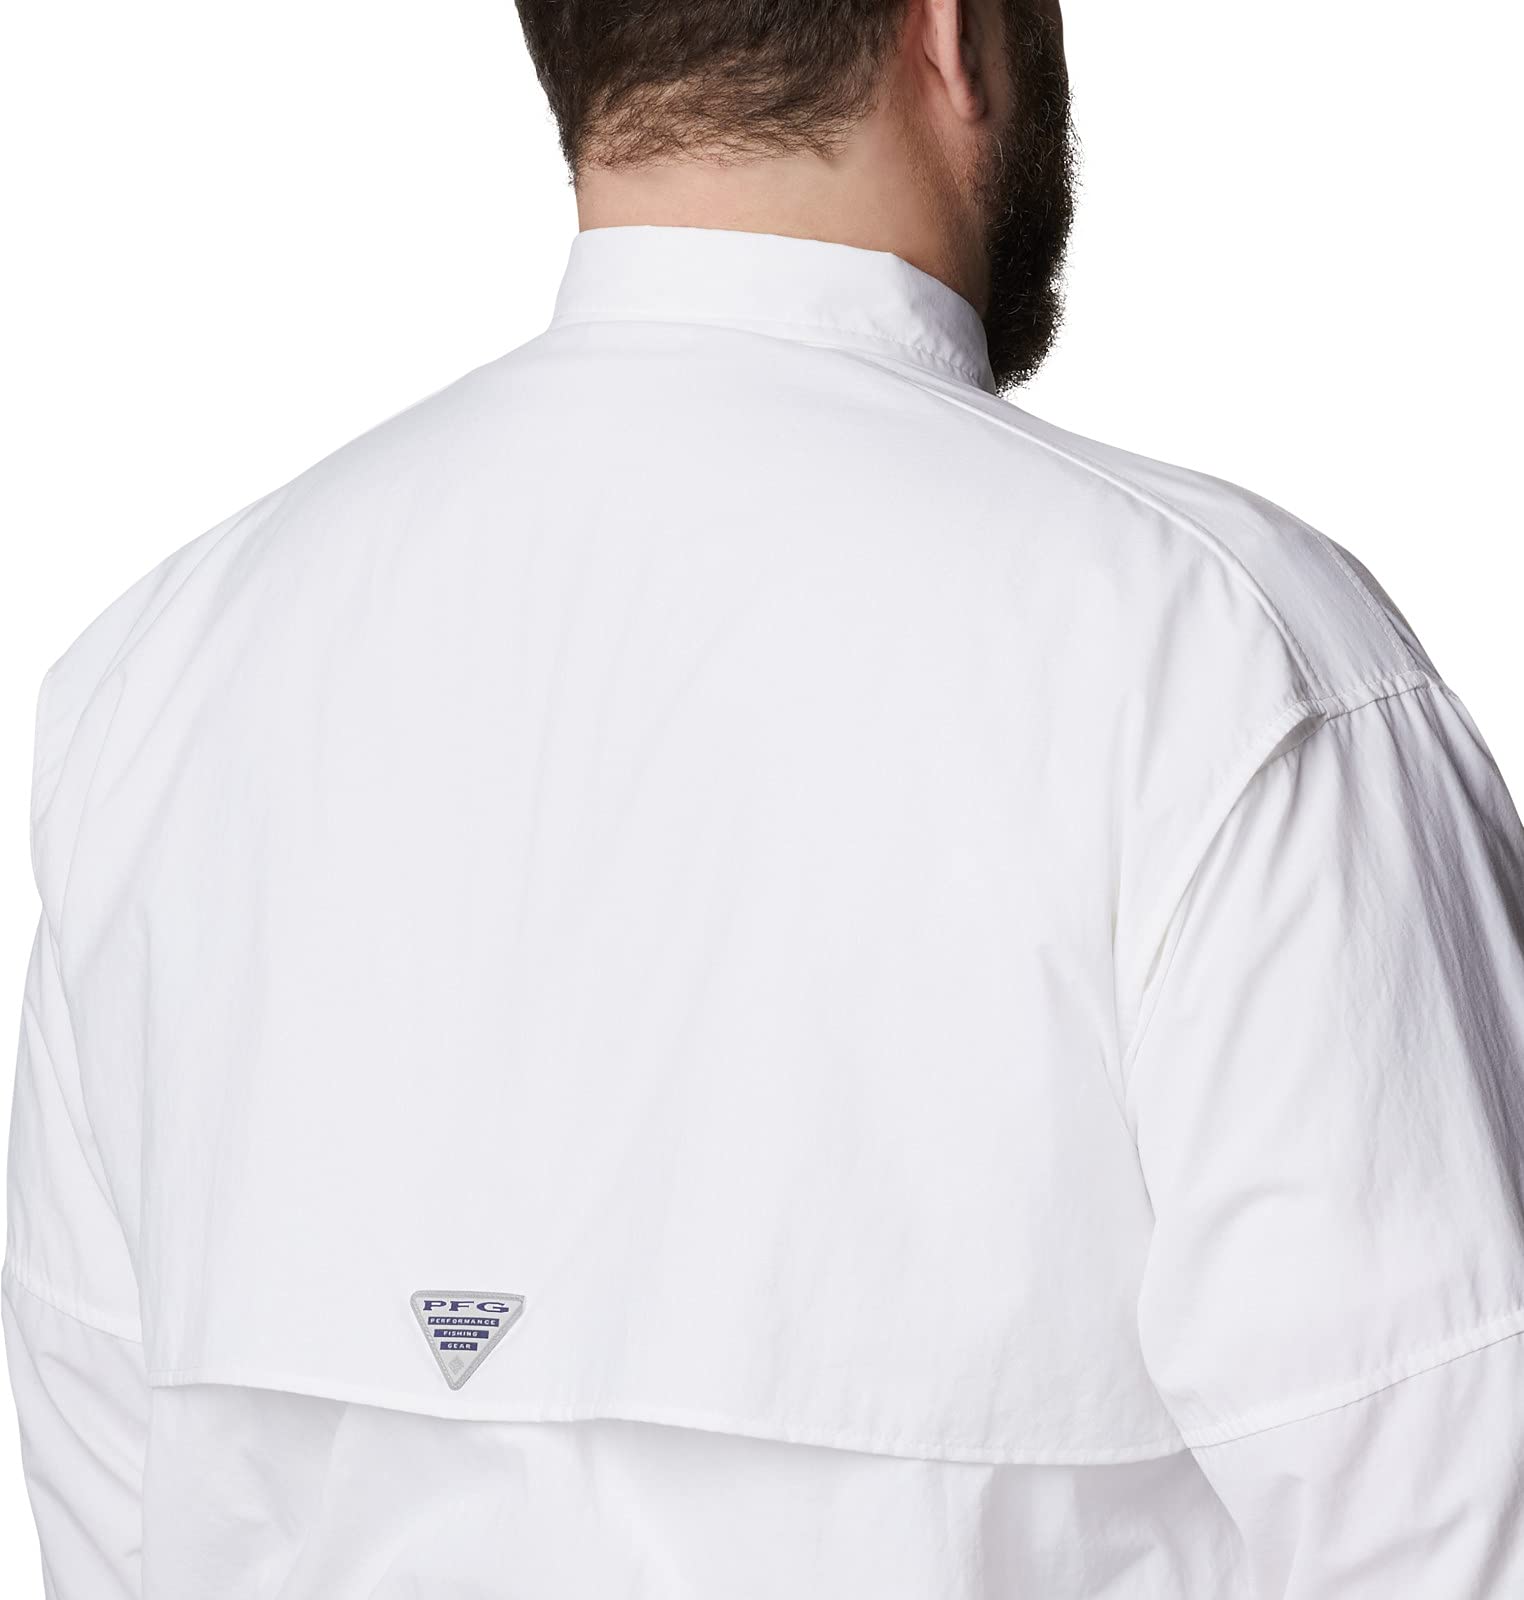 Columbia Men's Bahama II Long Sleeve Shirt,White,Small